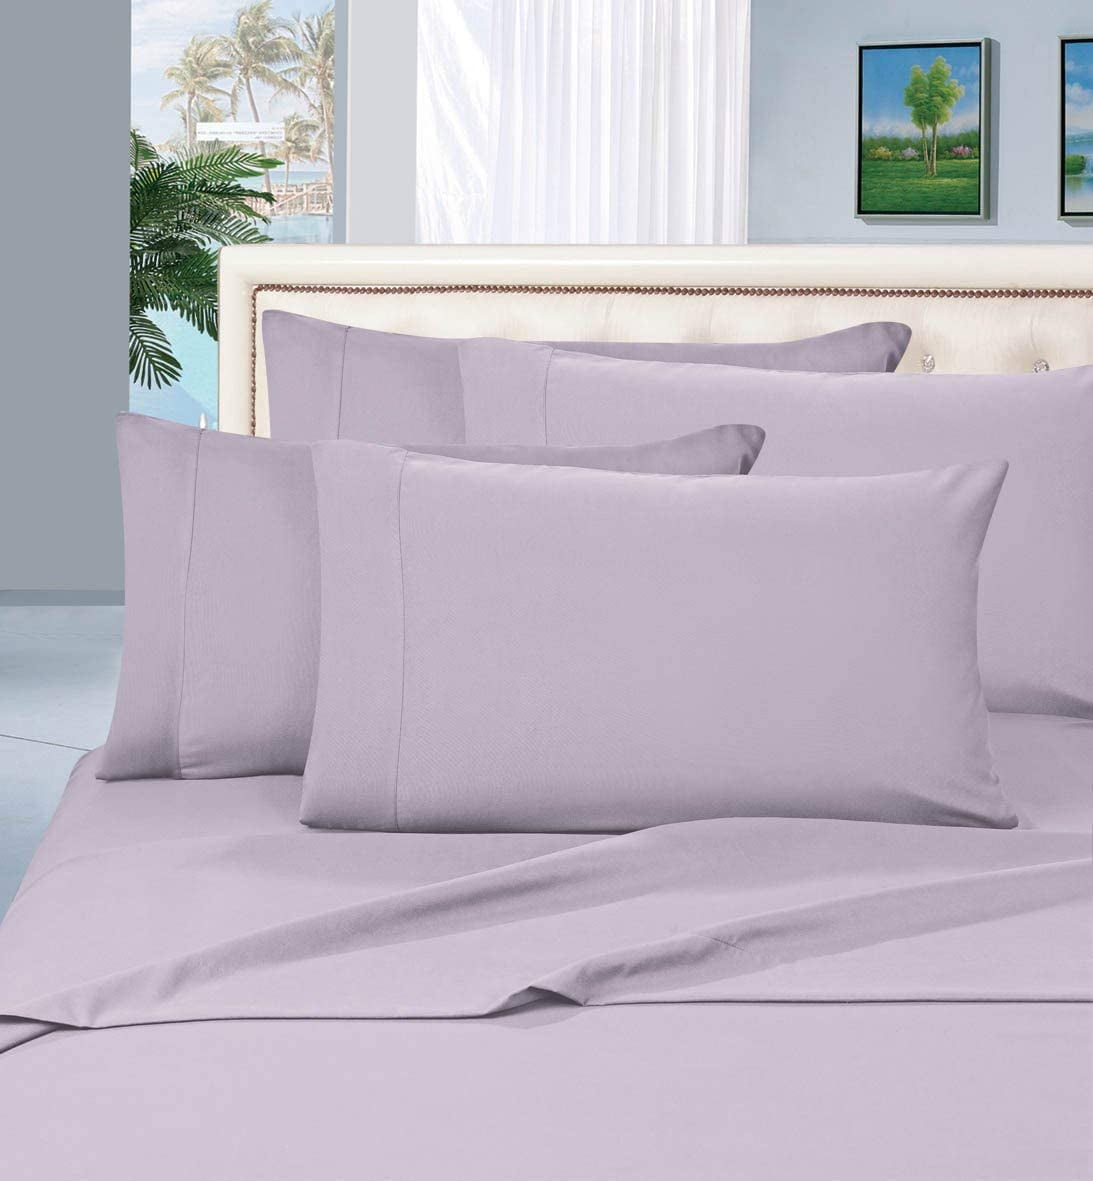 Buy Utopia Bedding Flat Sheet Brushed Microfiber $4.94 Piece